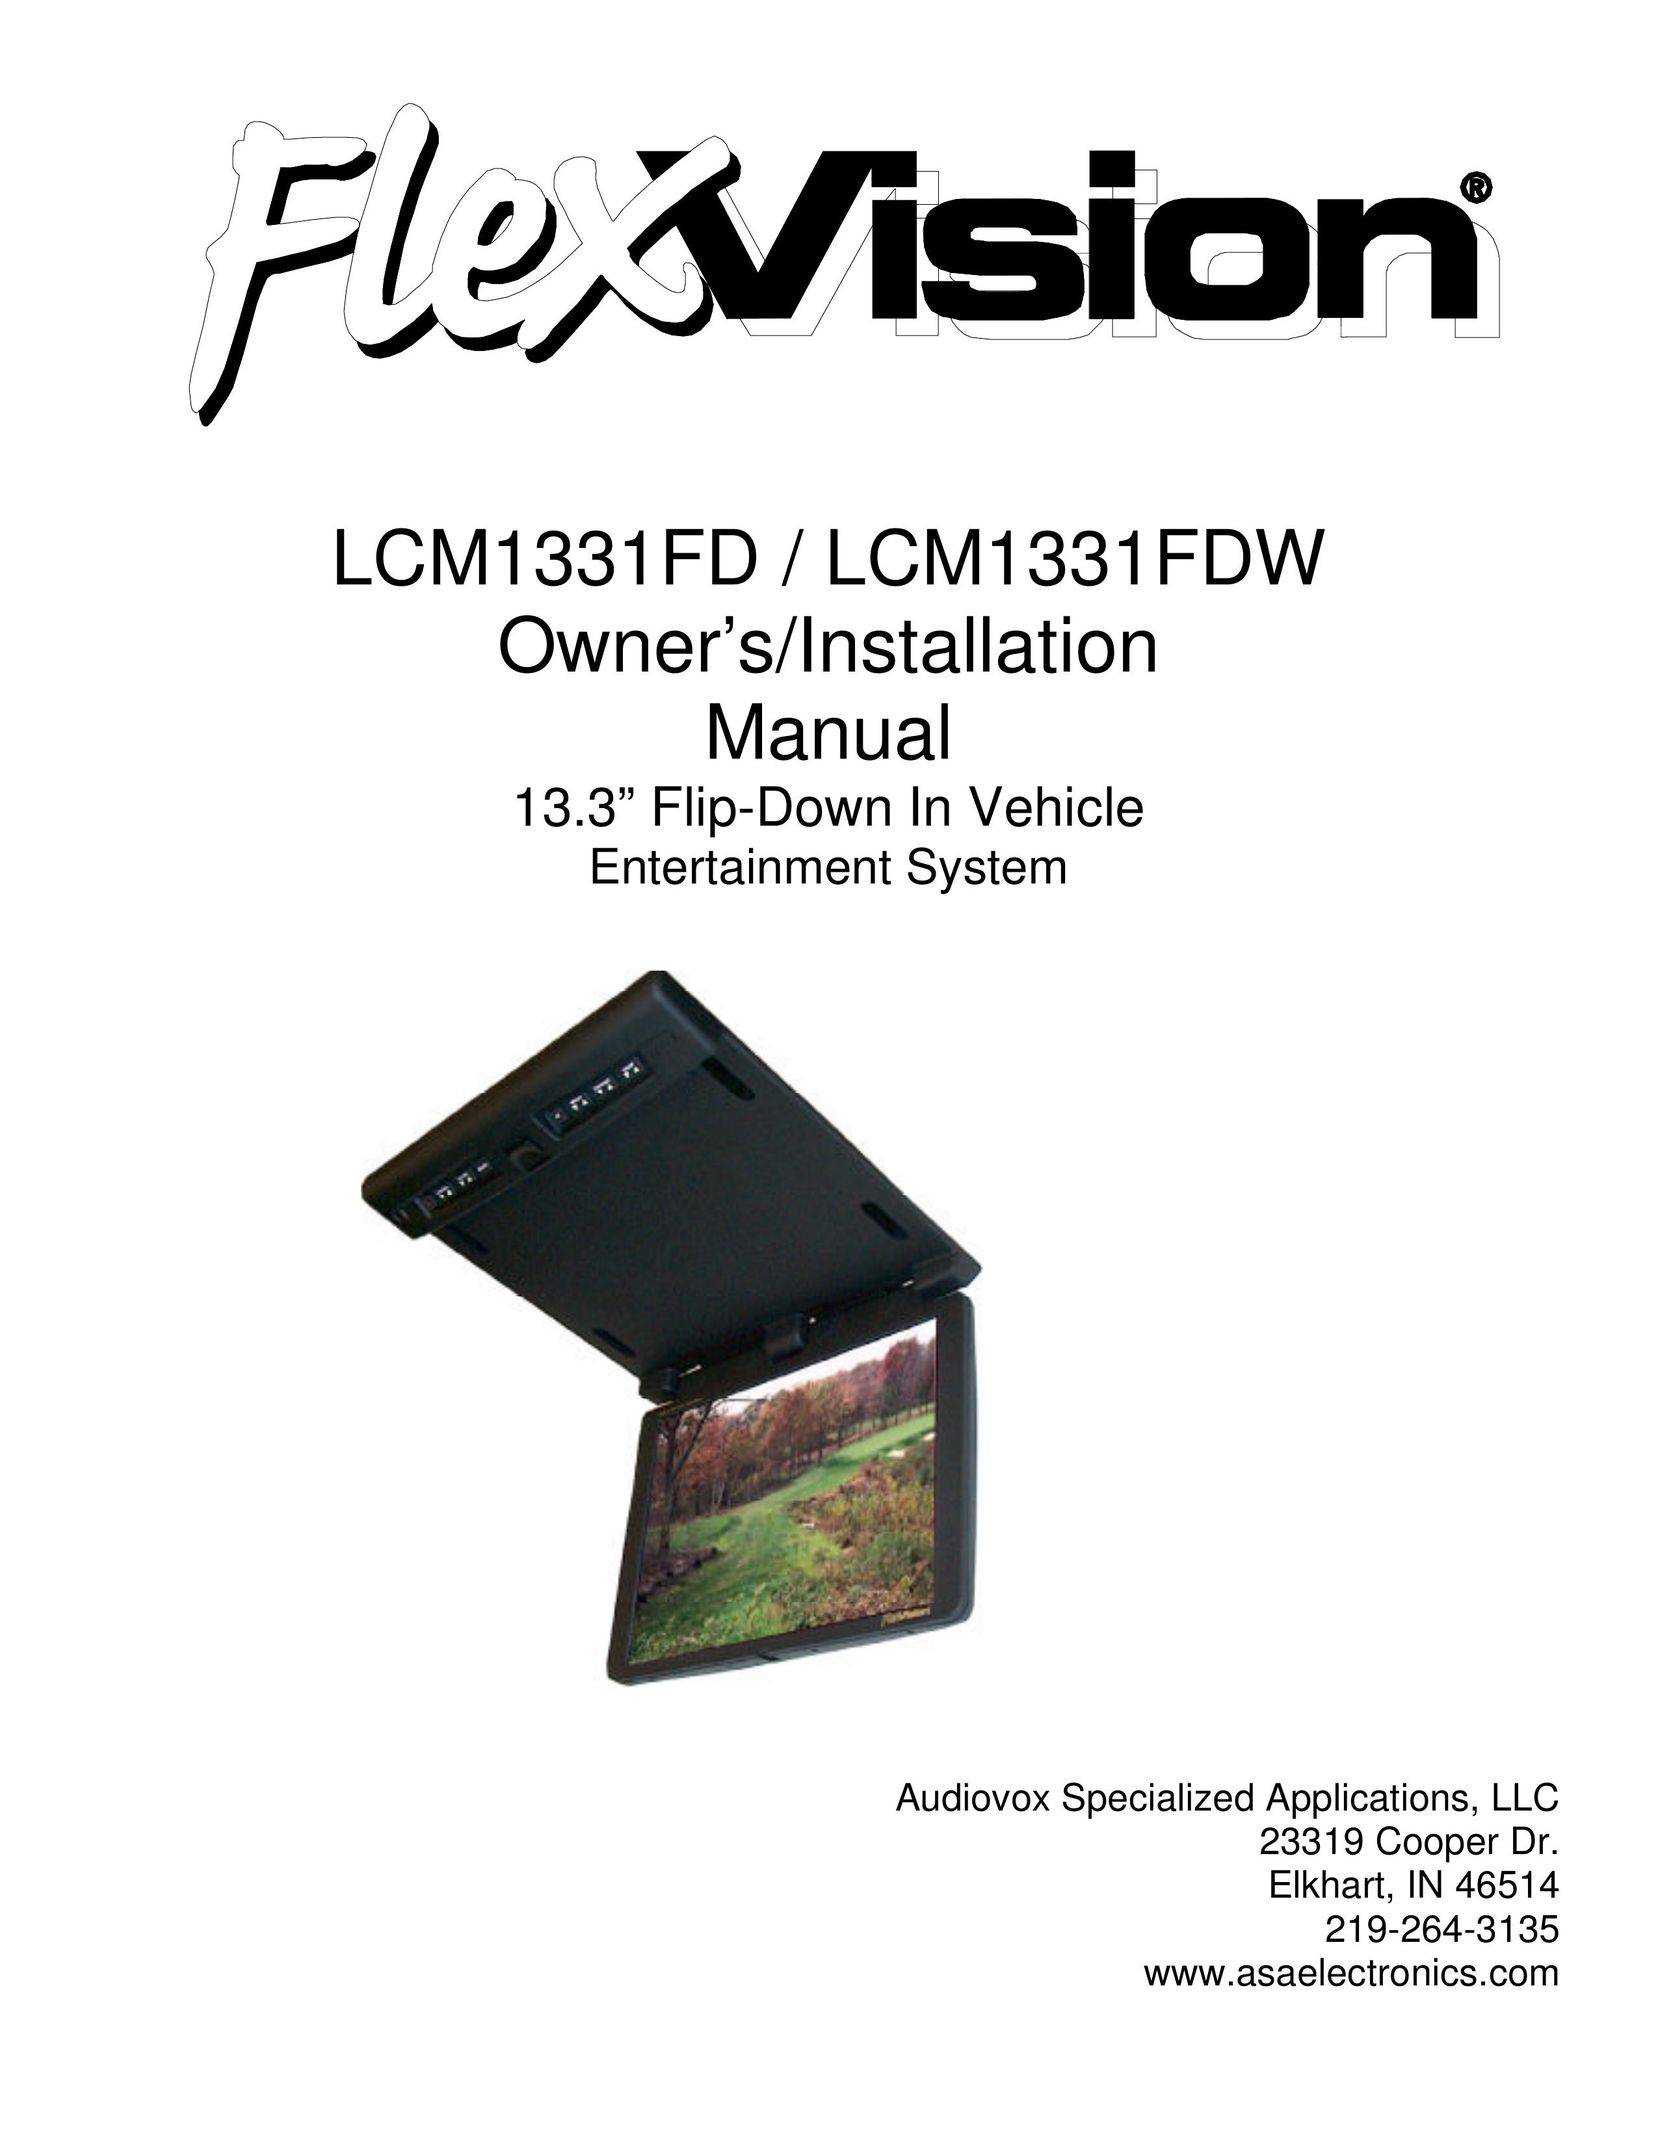 Audiovox LCM1331FDW Portable DVD Player User Manual